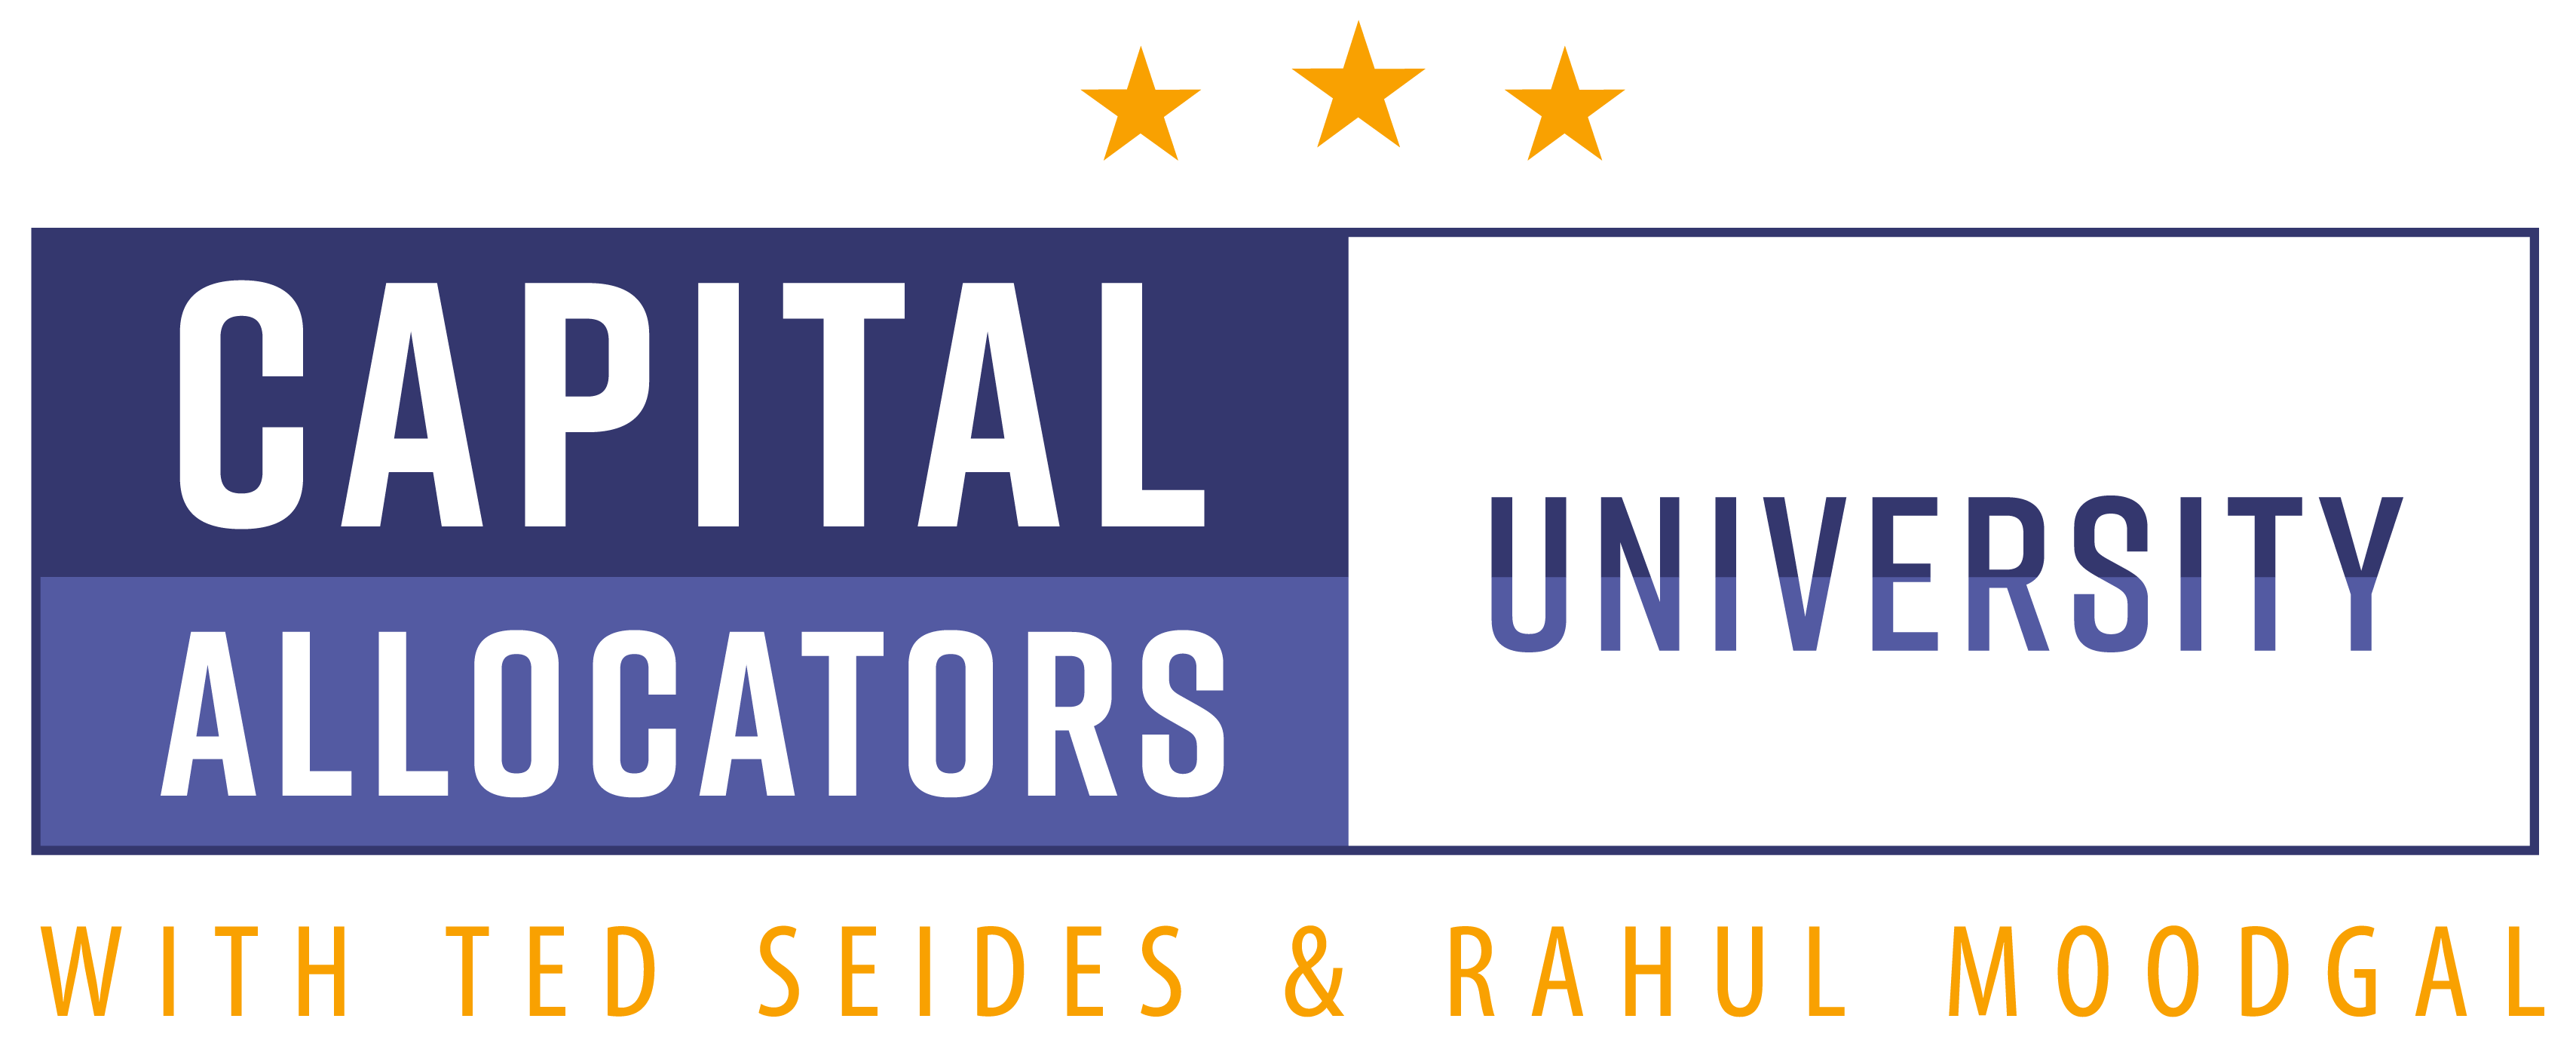 Capital Allocators University logo